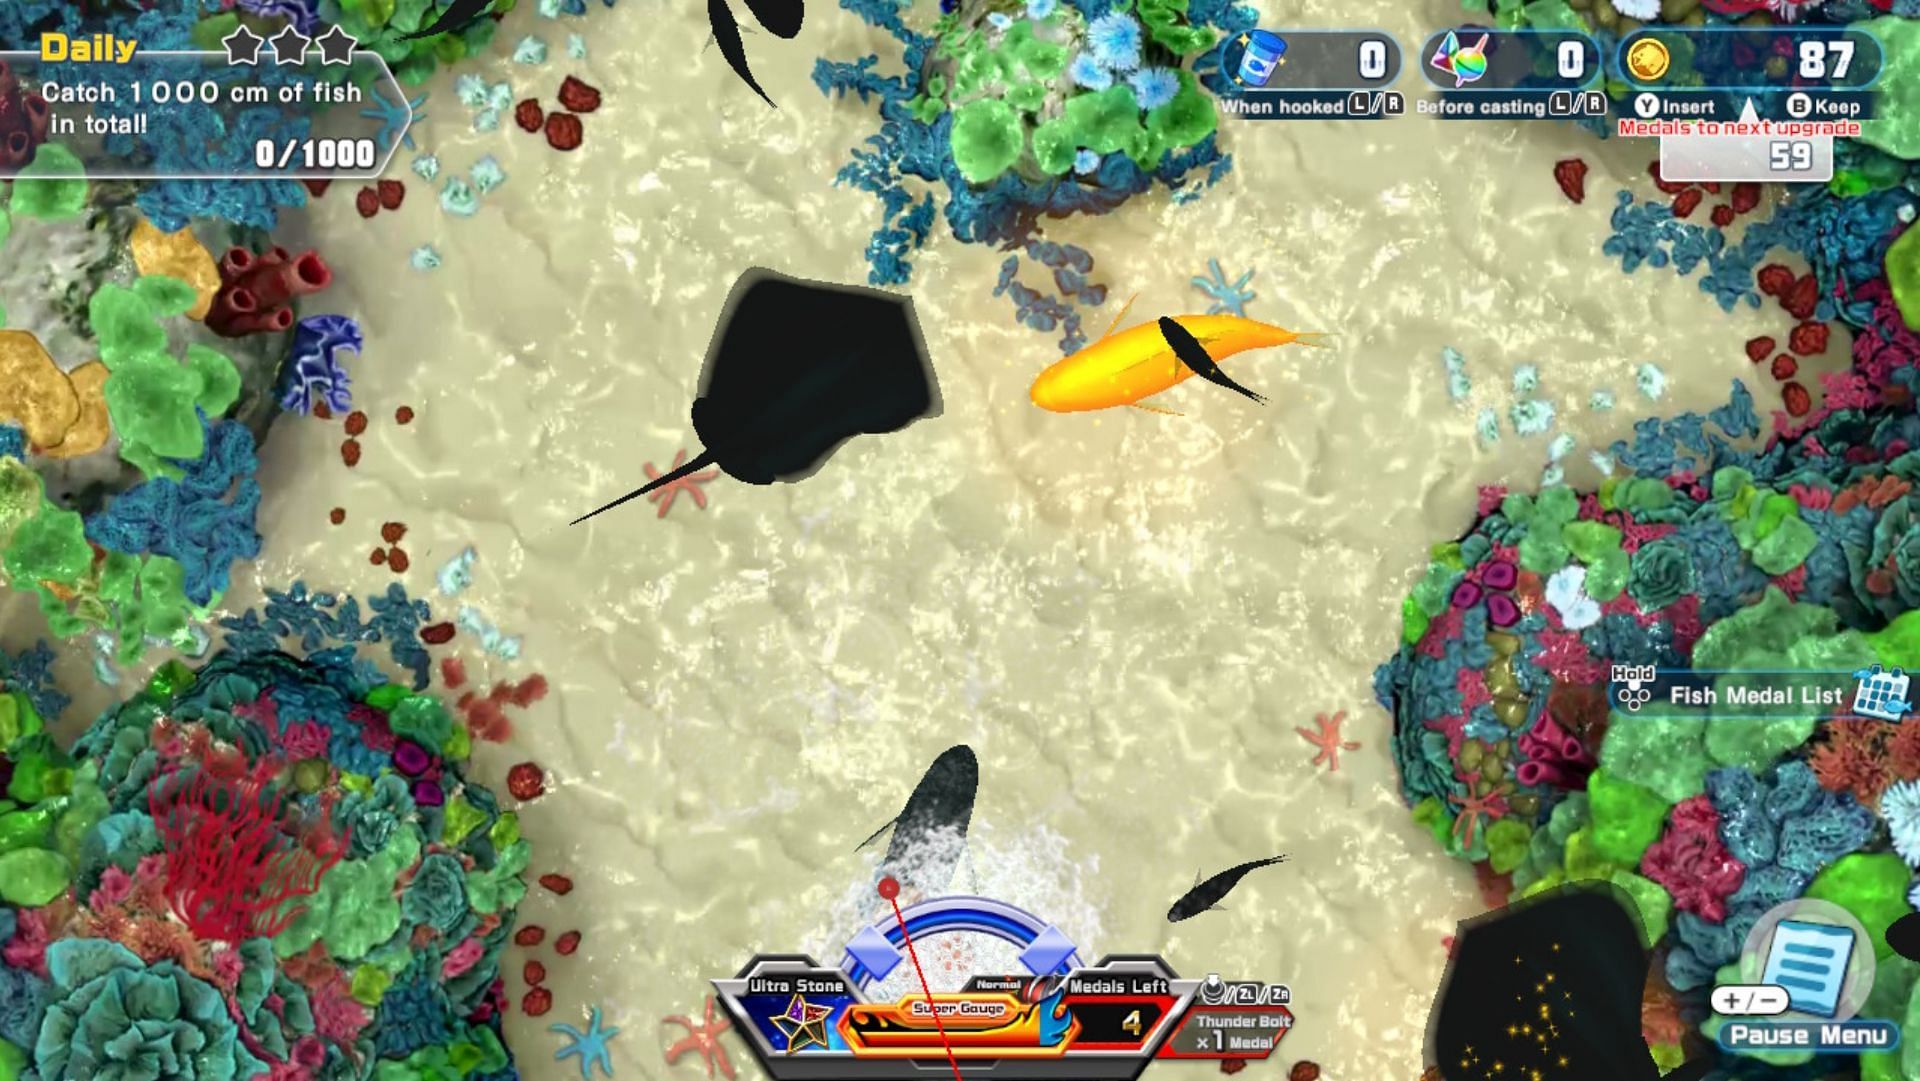 Ace Angler: Fishing Spirits review: An incredibly fun arcade